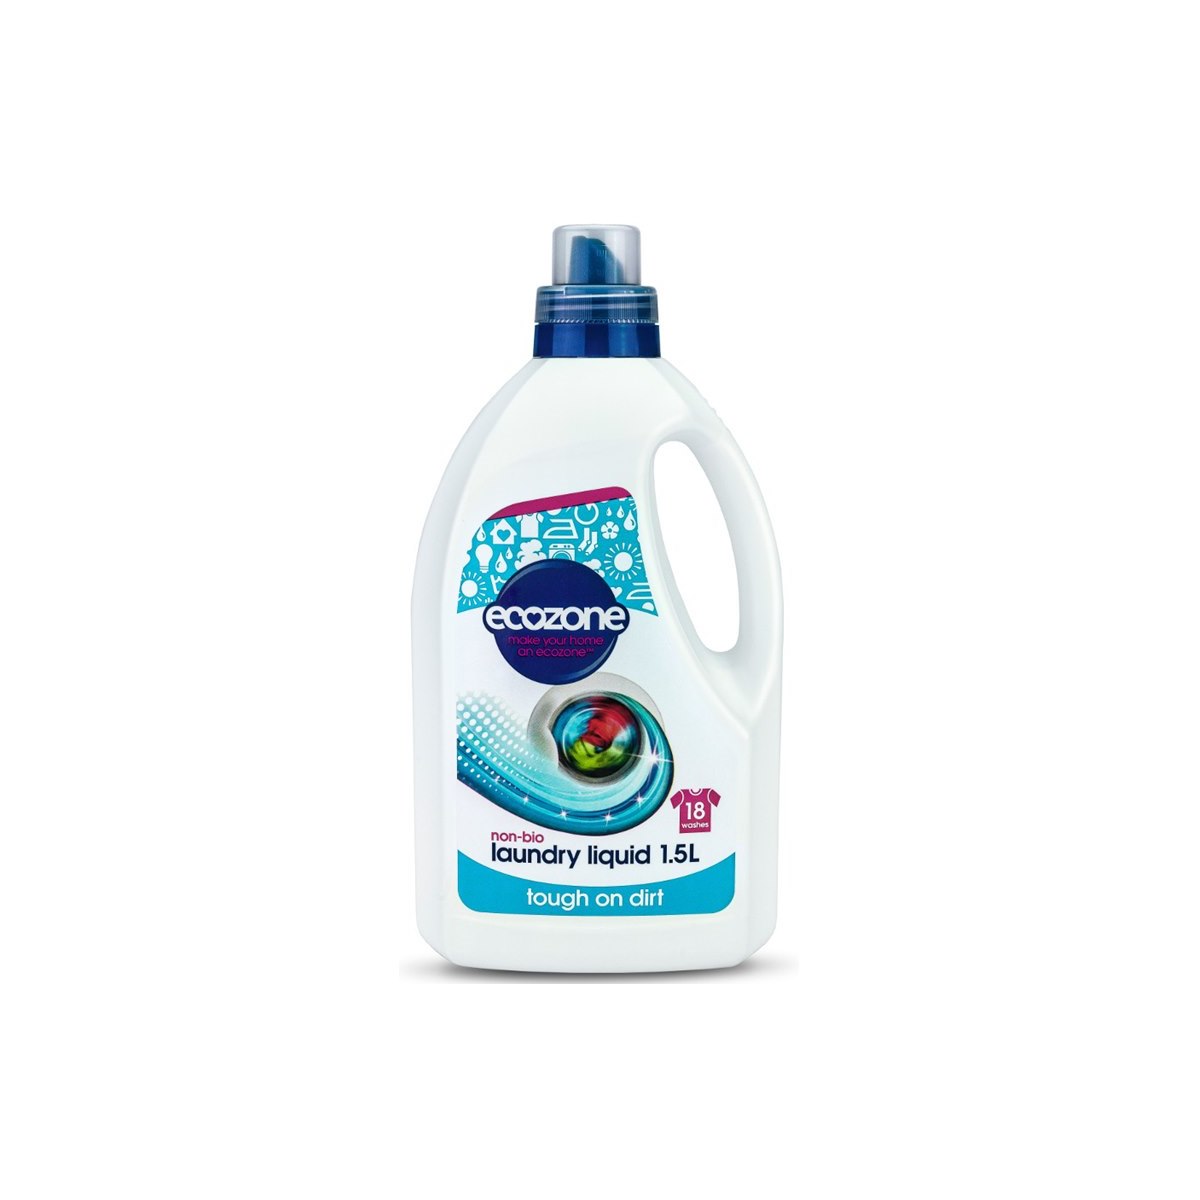 Ecozone Non-Bio Laundry Liquid, 1.5 Litres, Tough On Stubborn Dirt, 18 Washes